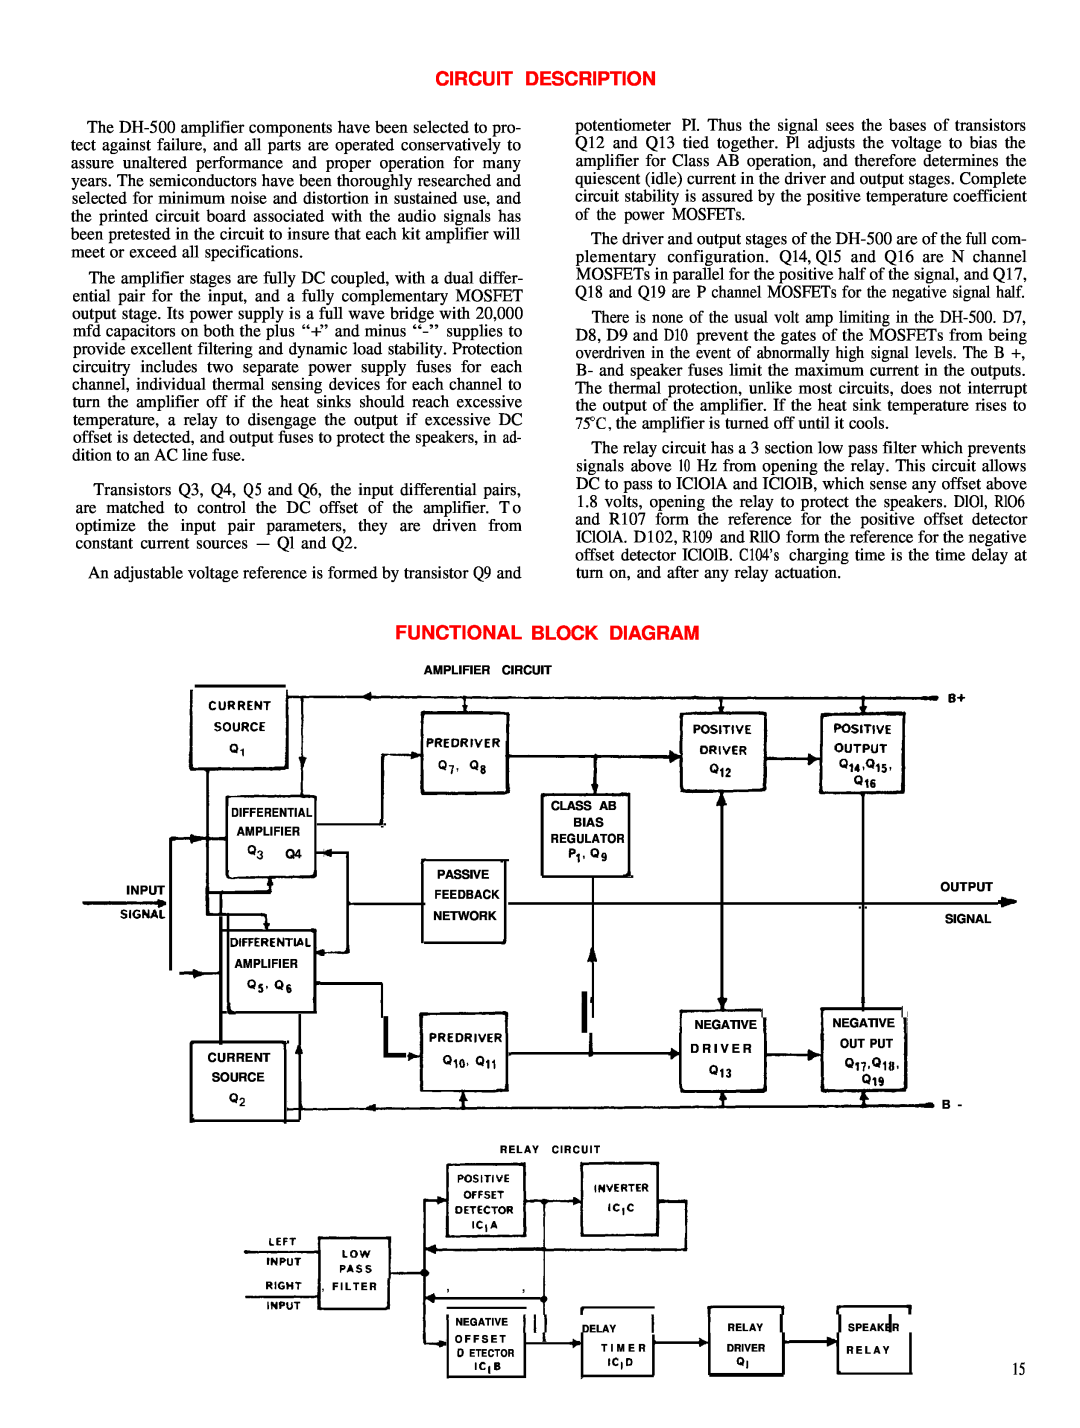 Hafler DH-500 manual Circuit Description, Functional Block Diagram 